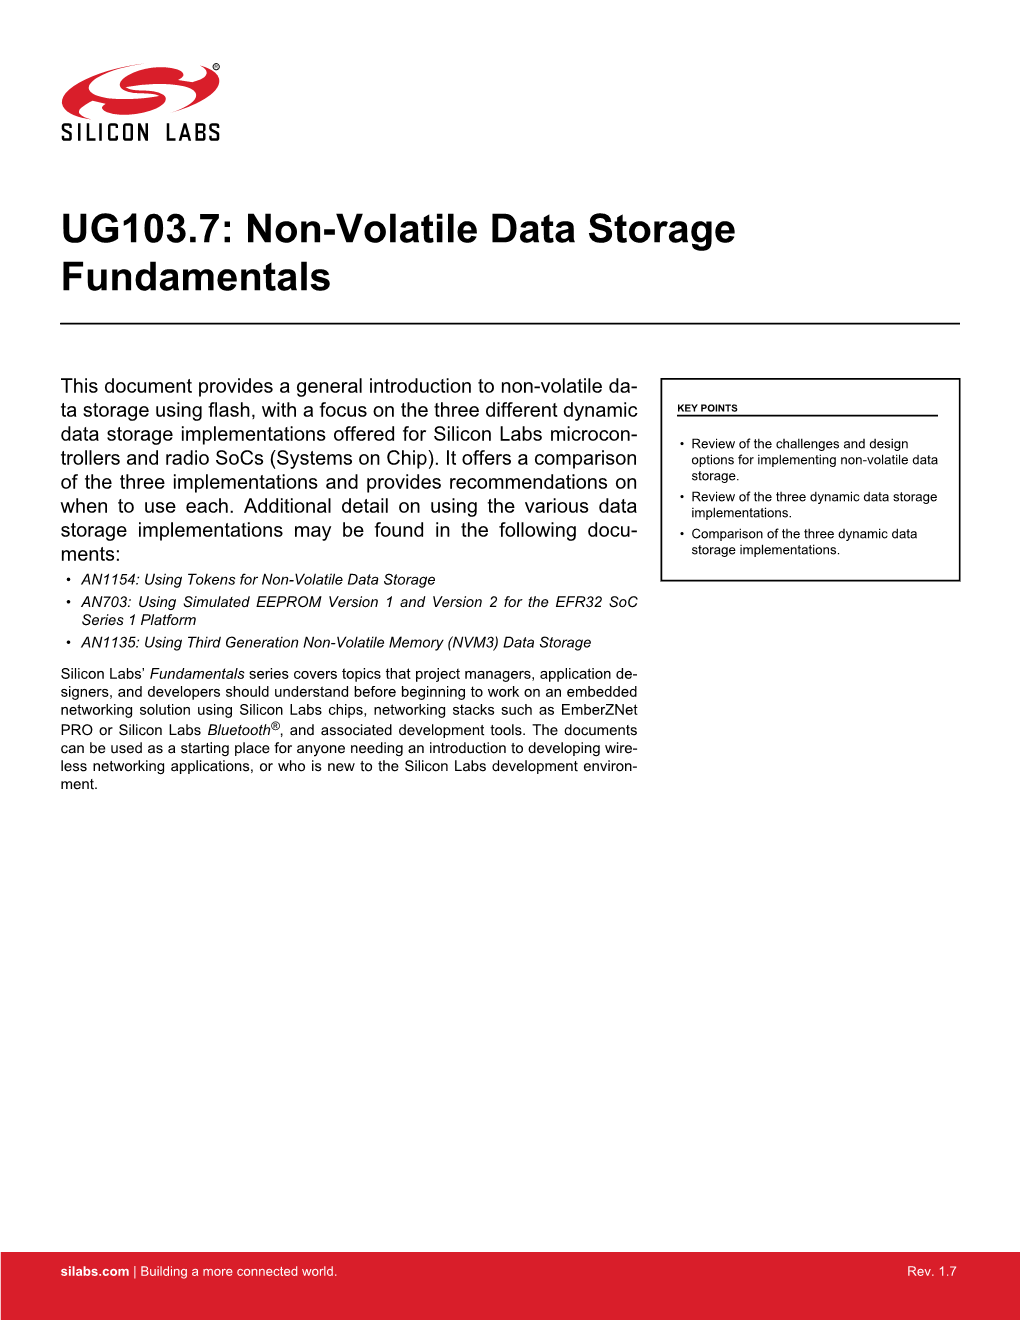 UG103.7: Non-Volatile Data Storage Fundamentals